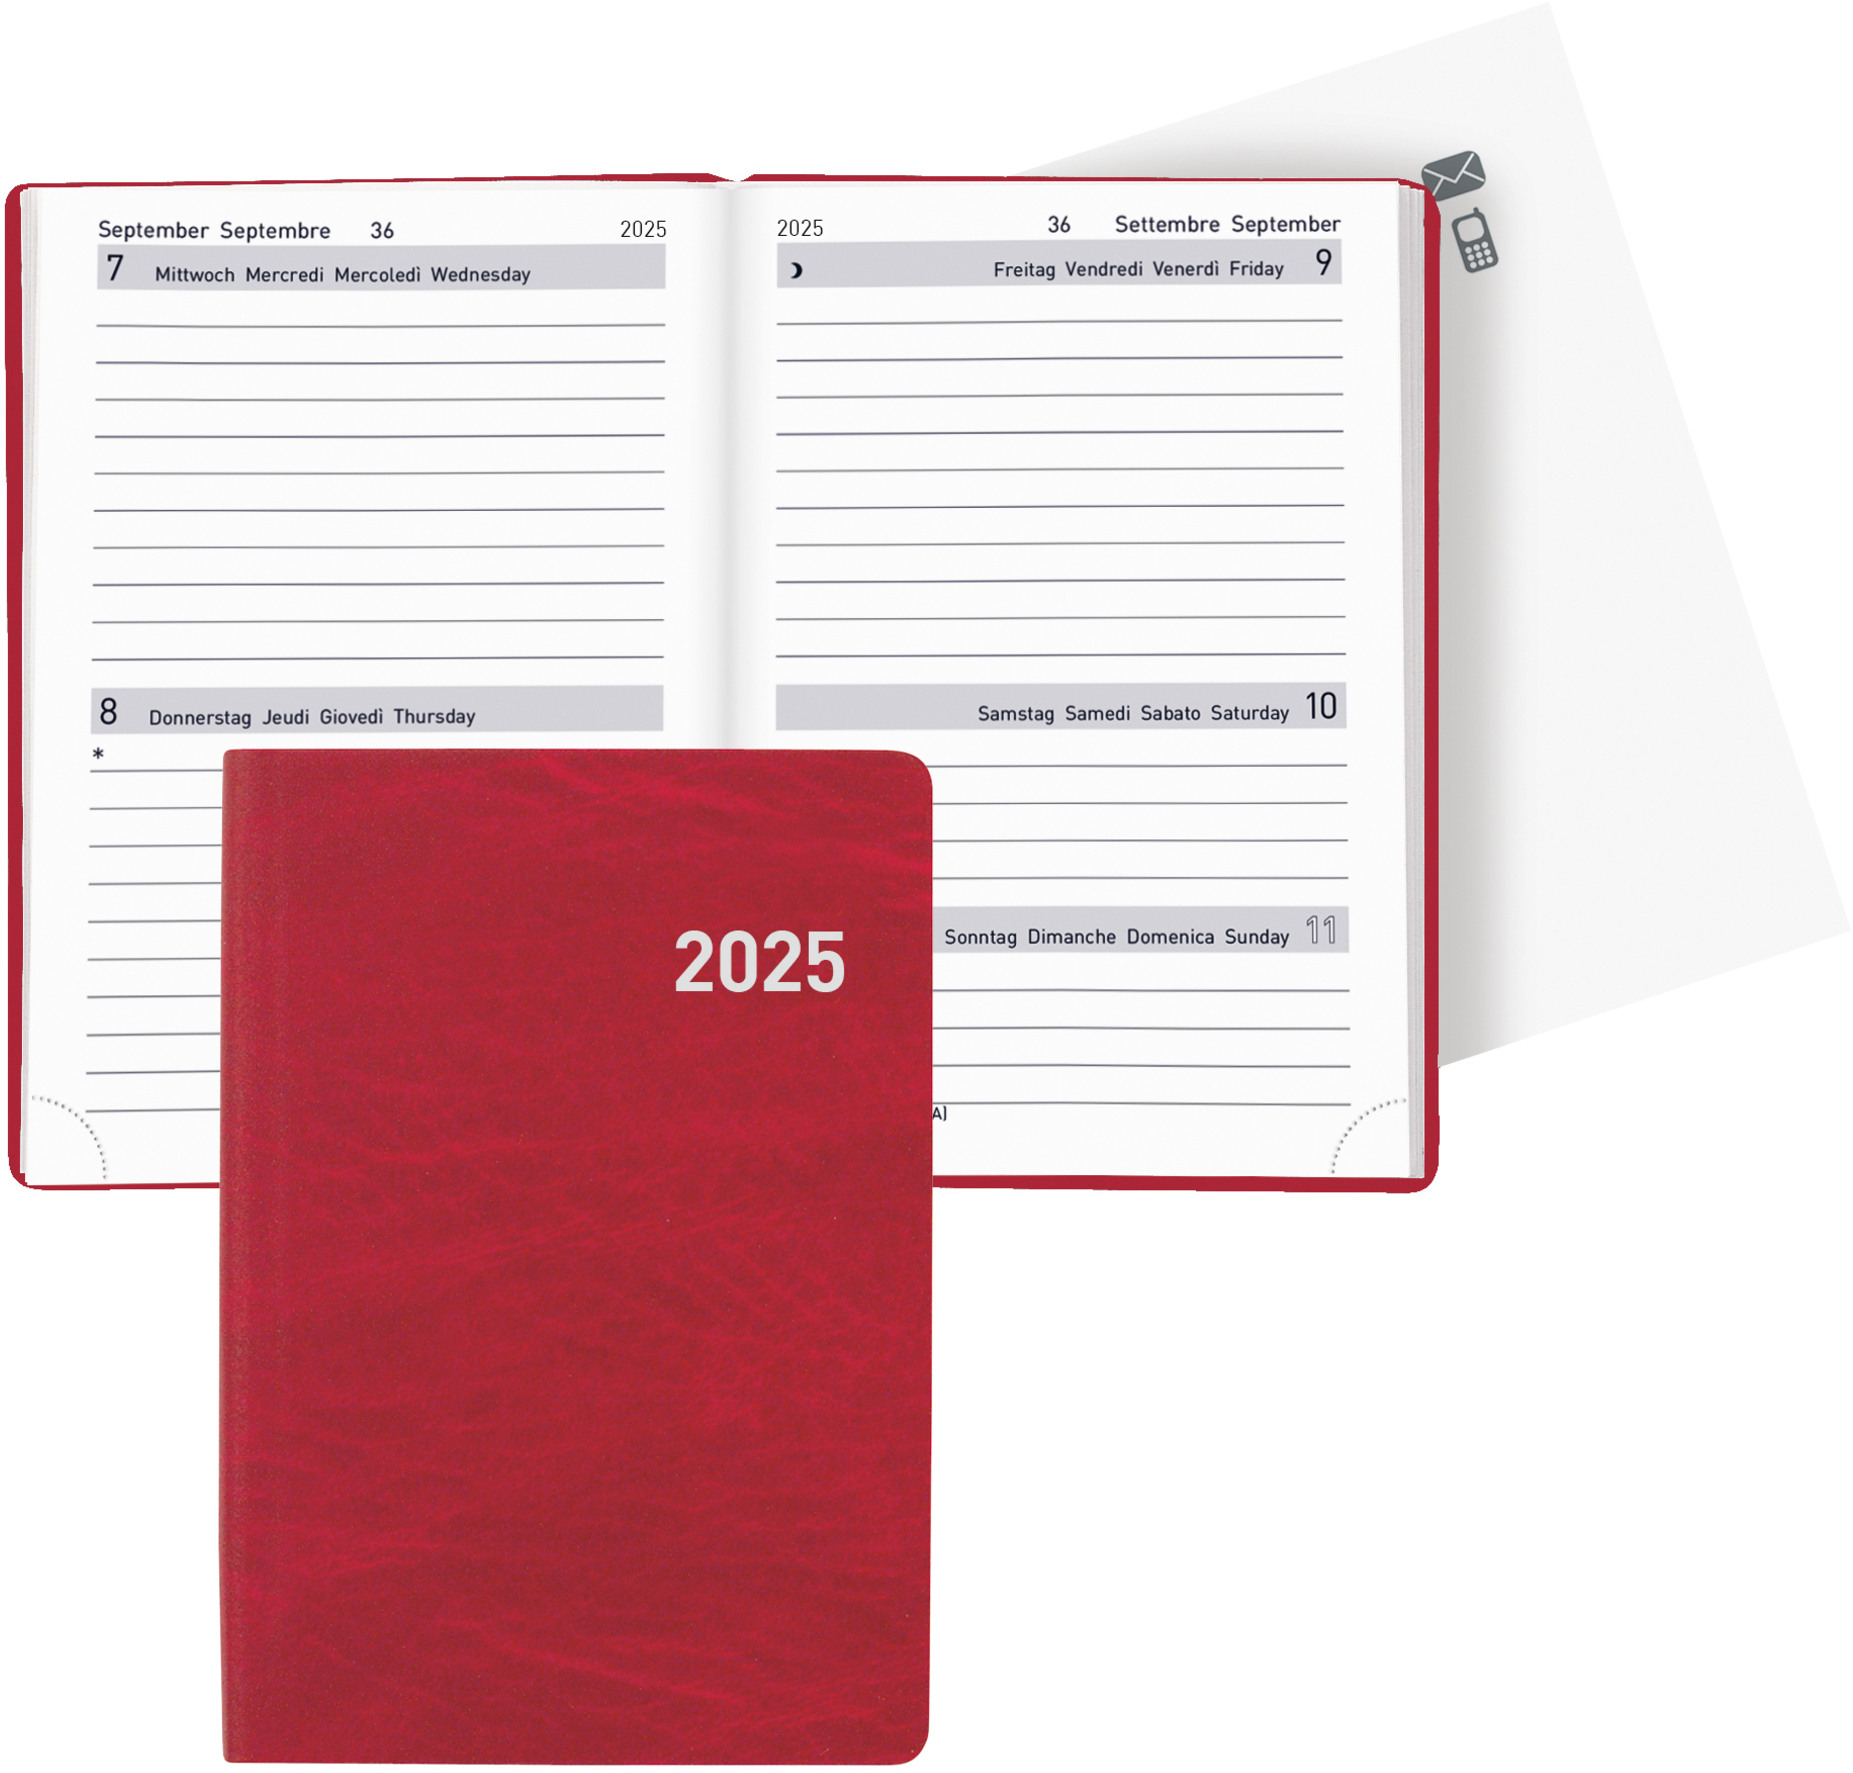 BIELLA Agenda Tell 2025 823201450025 2J/1P rouge ML 8.5x12.5cm